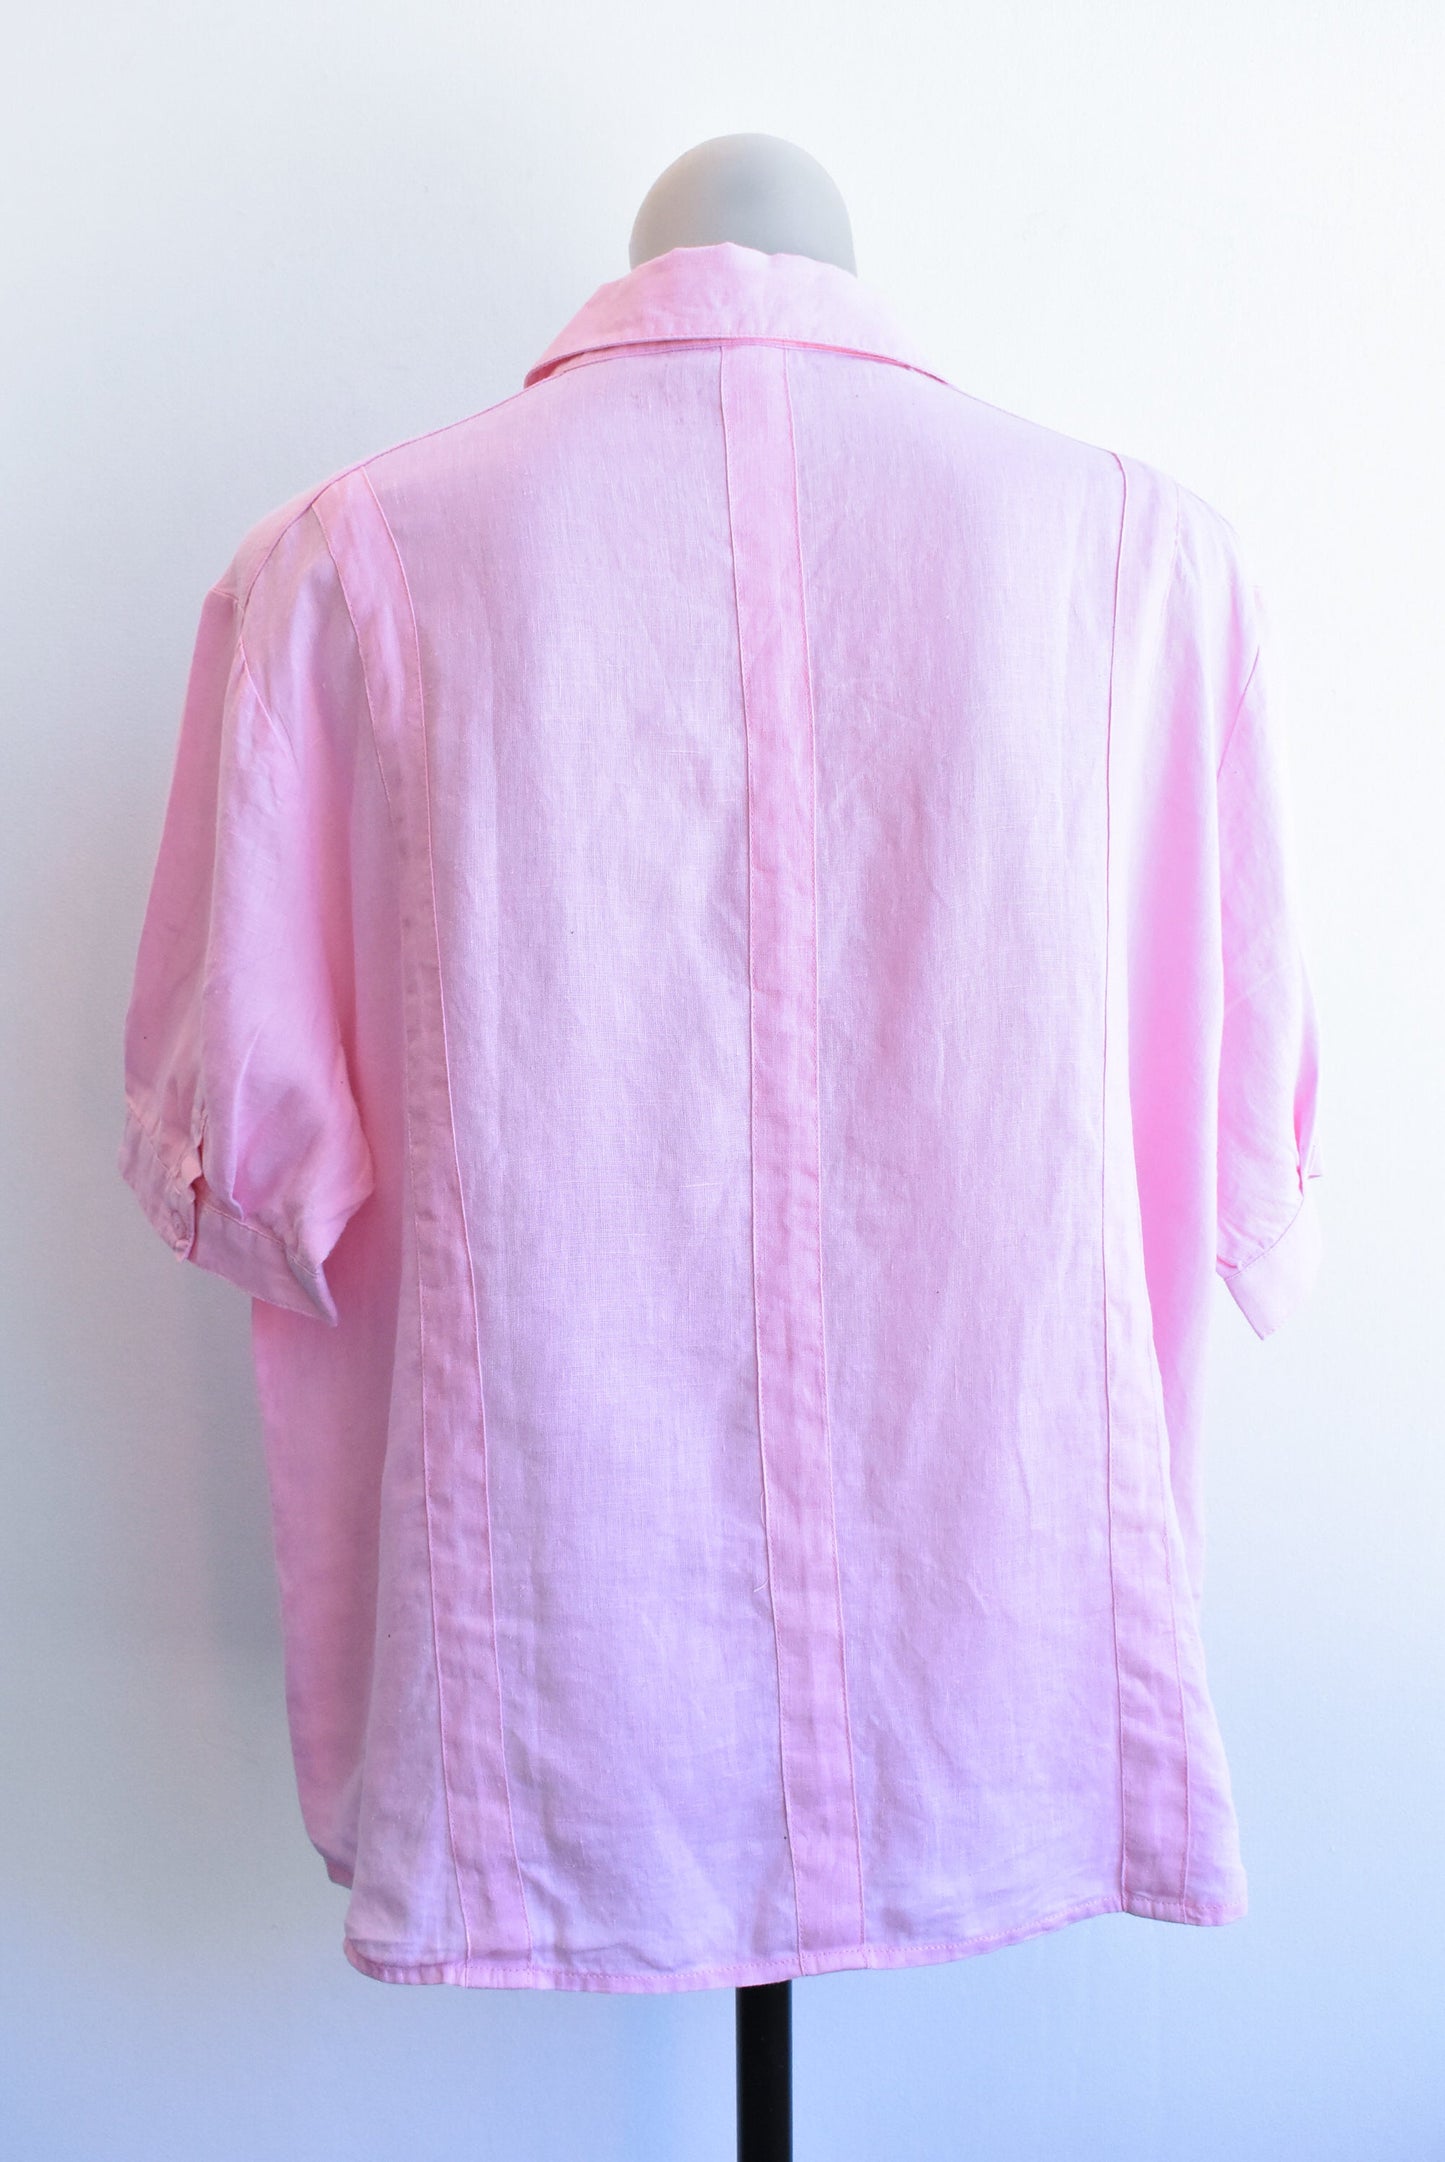 Yarra Trail pink 100% linen top, size L